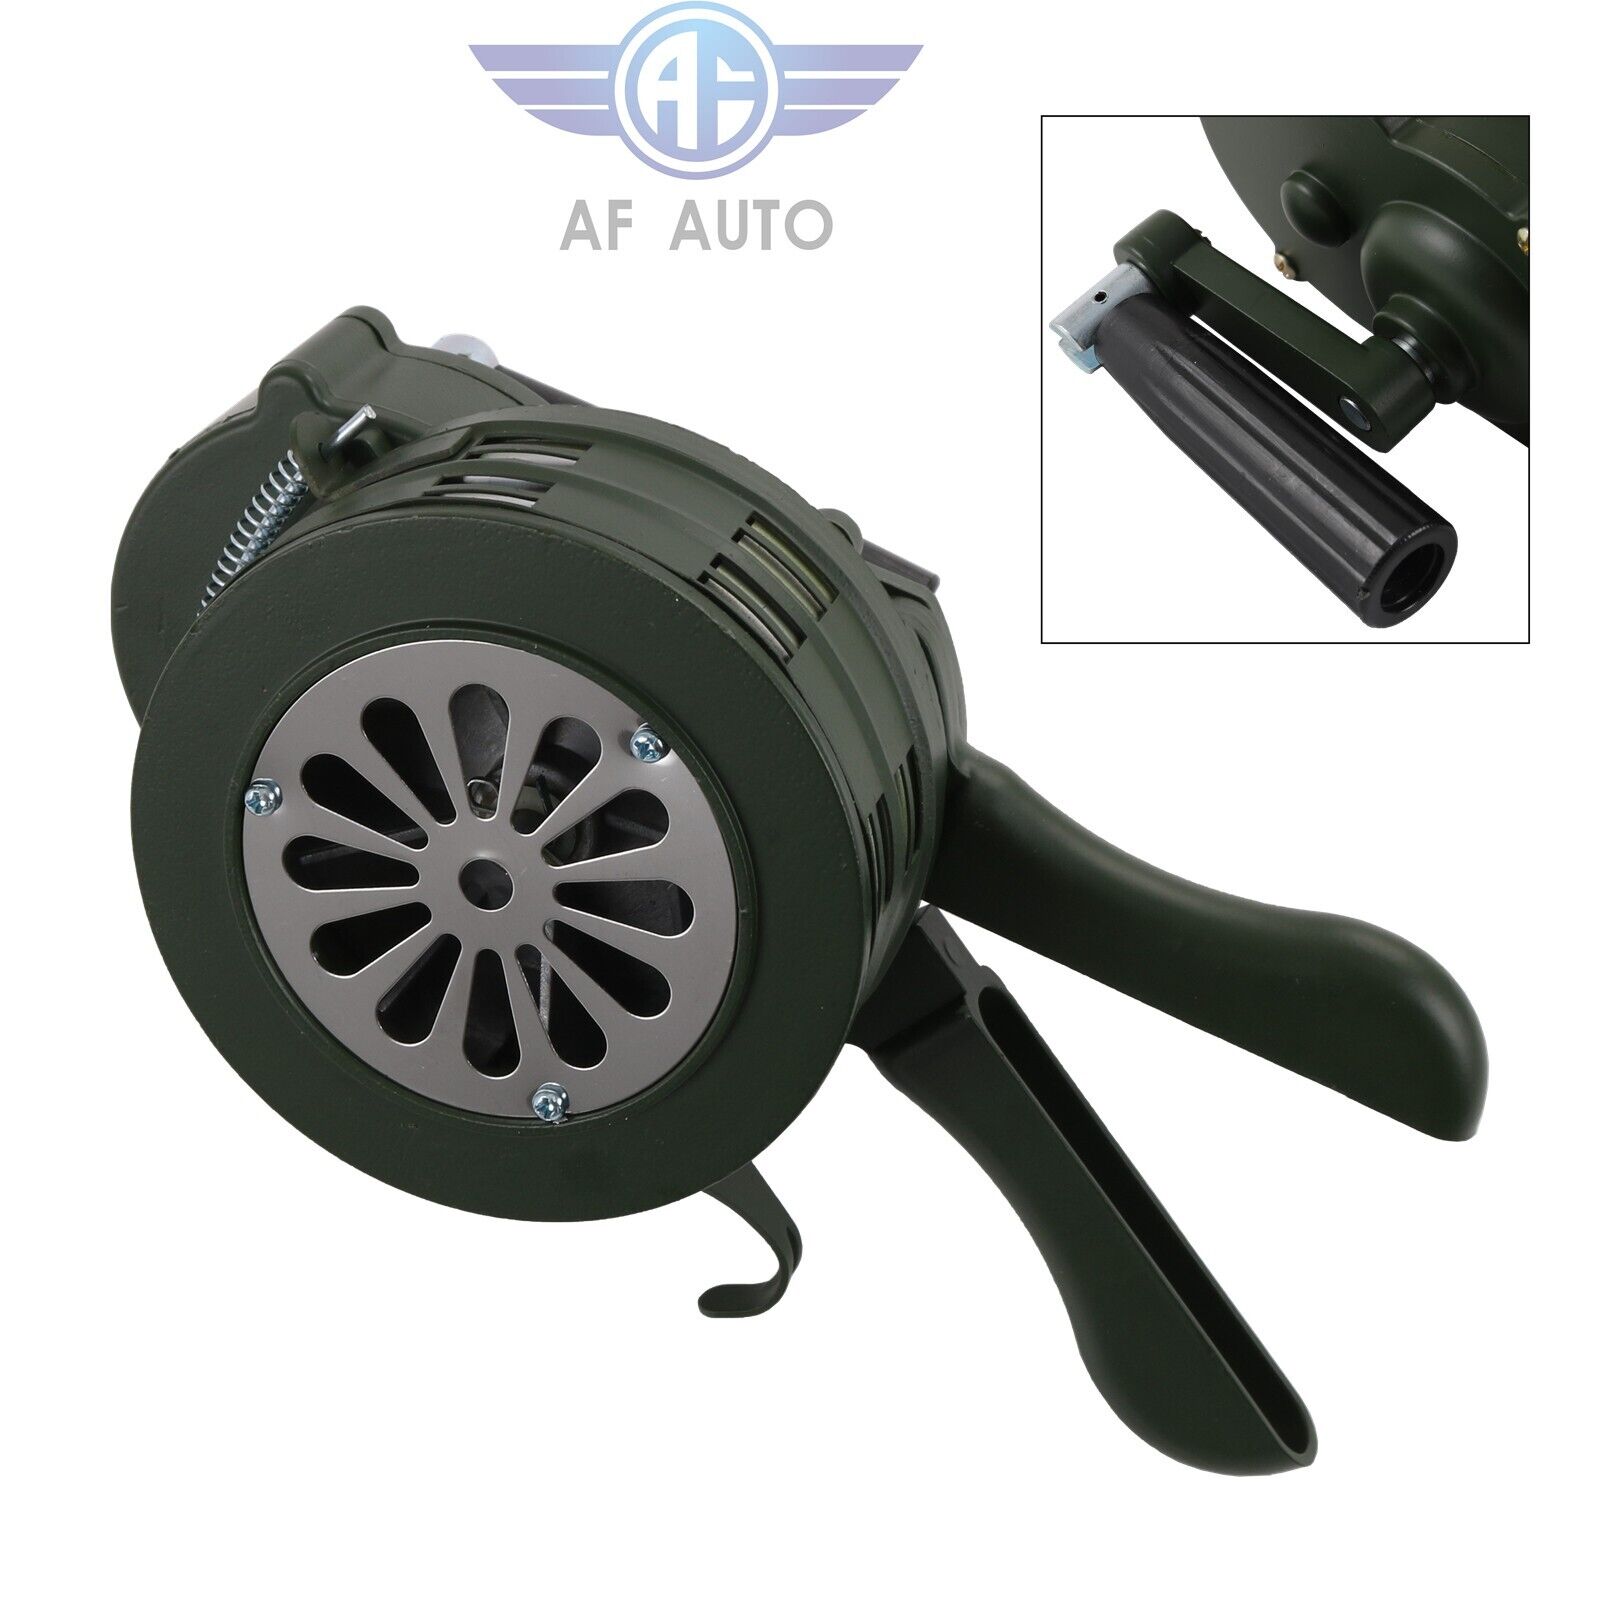 Metal Alarm Handheld Air Raid Siren Portable Loud Manual Siren Emergency Safety